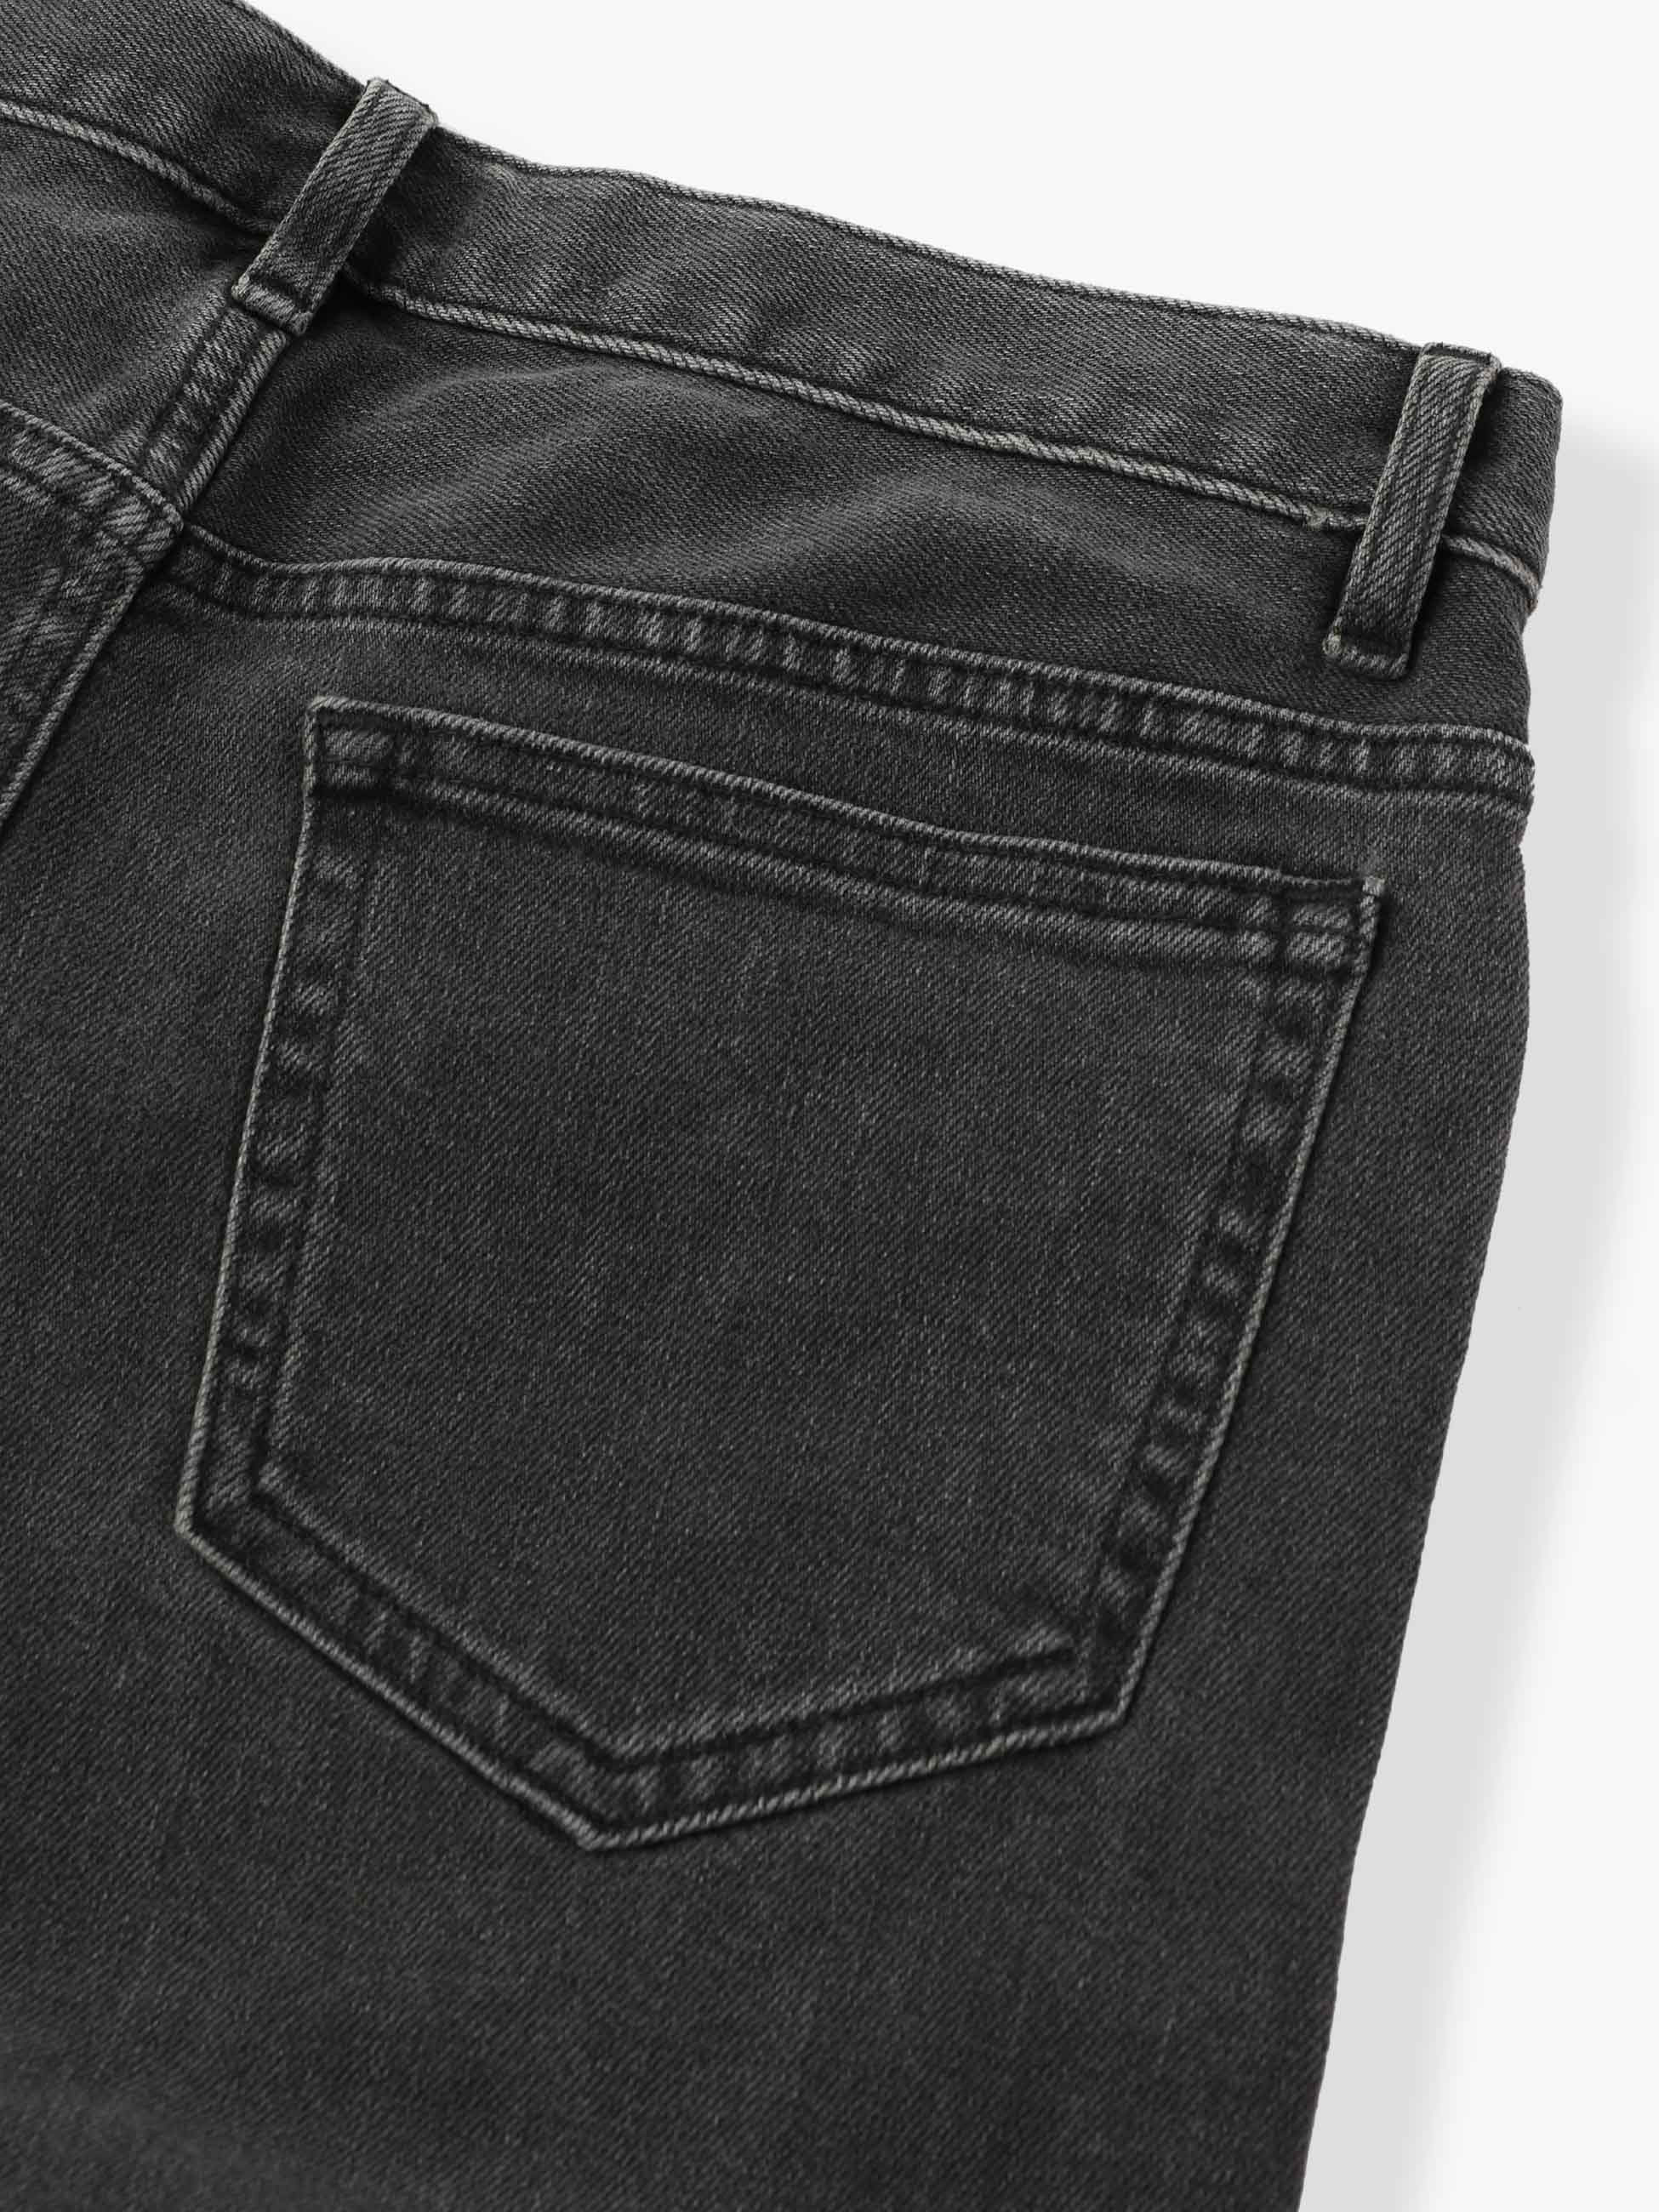 Petite New Standard Black Denim Pants 詳細画像 black 7